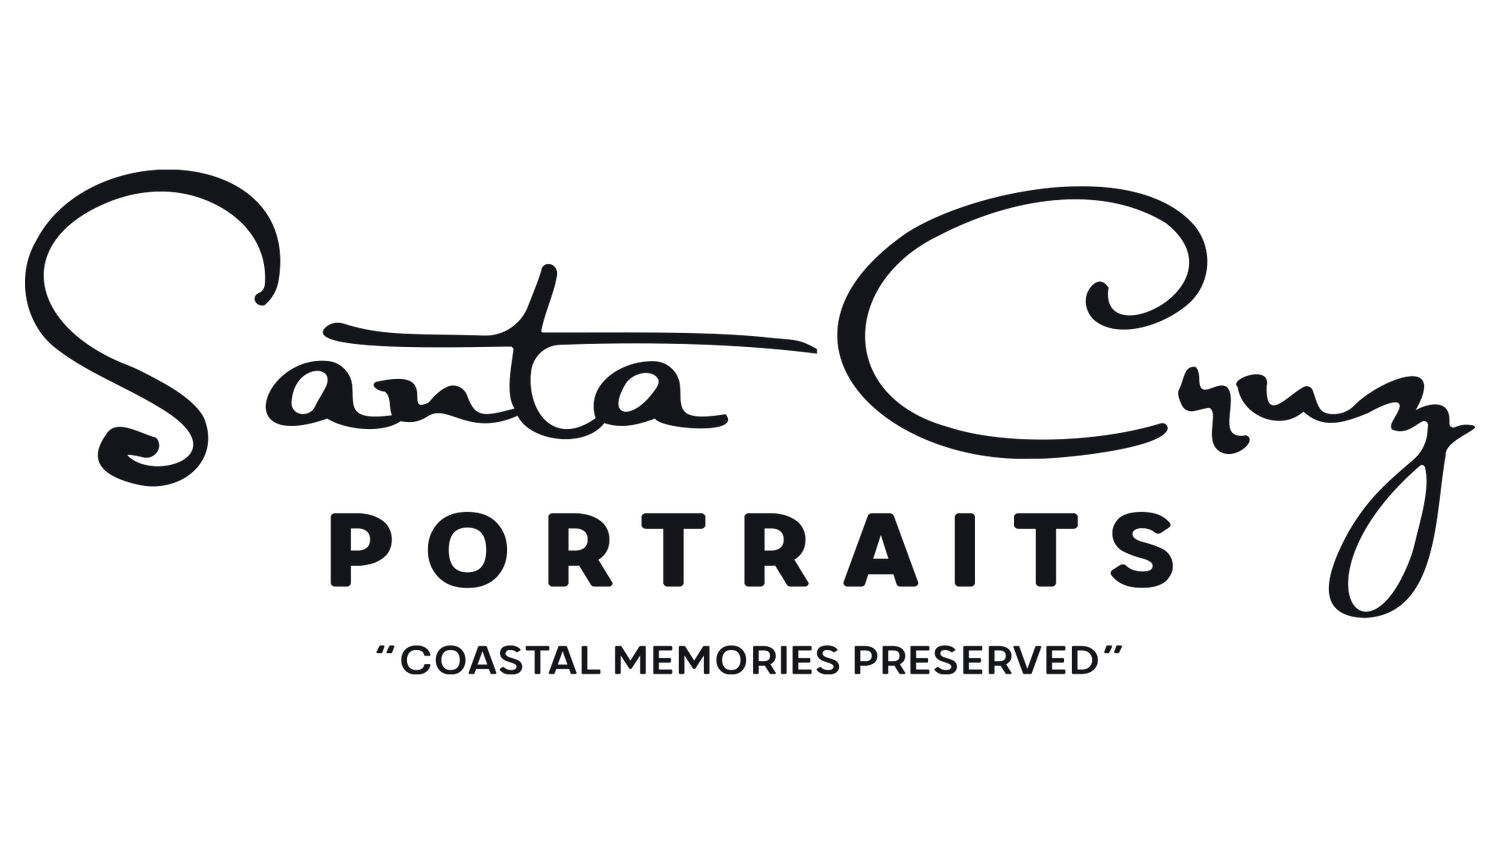 Santa Cruz Portraits